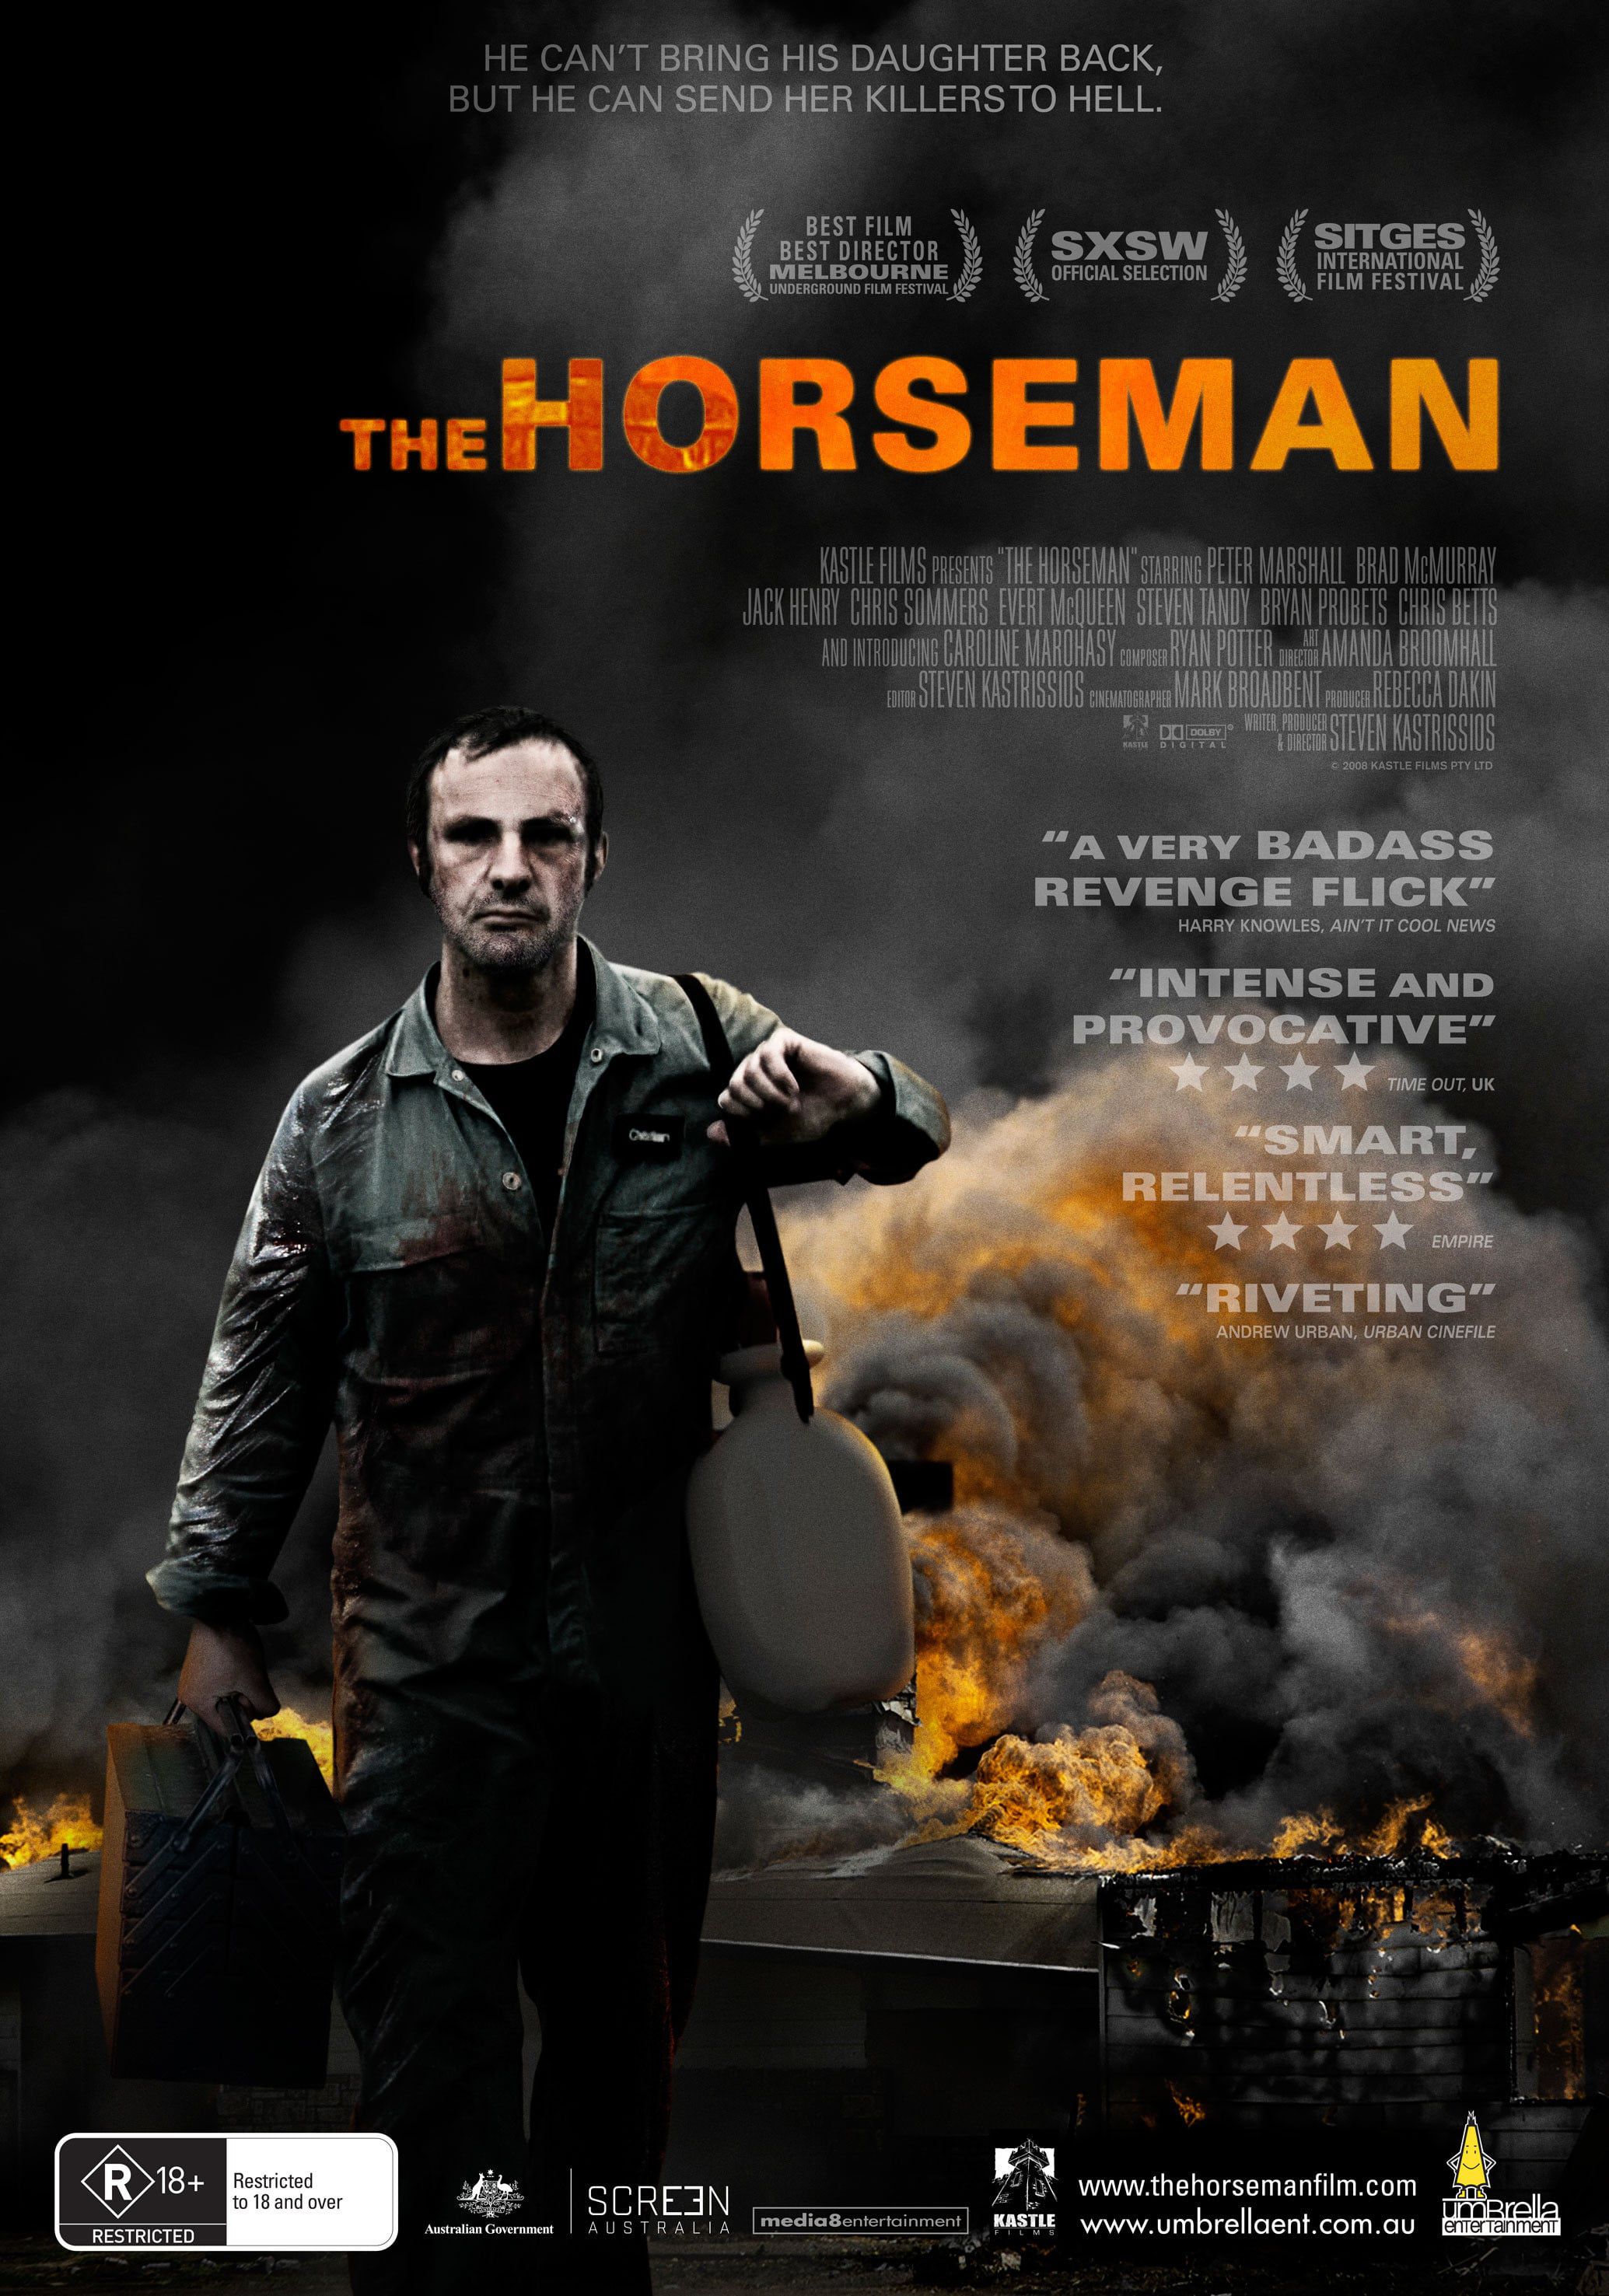 The Horseman - Film (2008) streaming VF gratuit complet